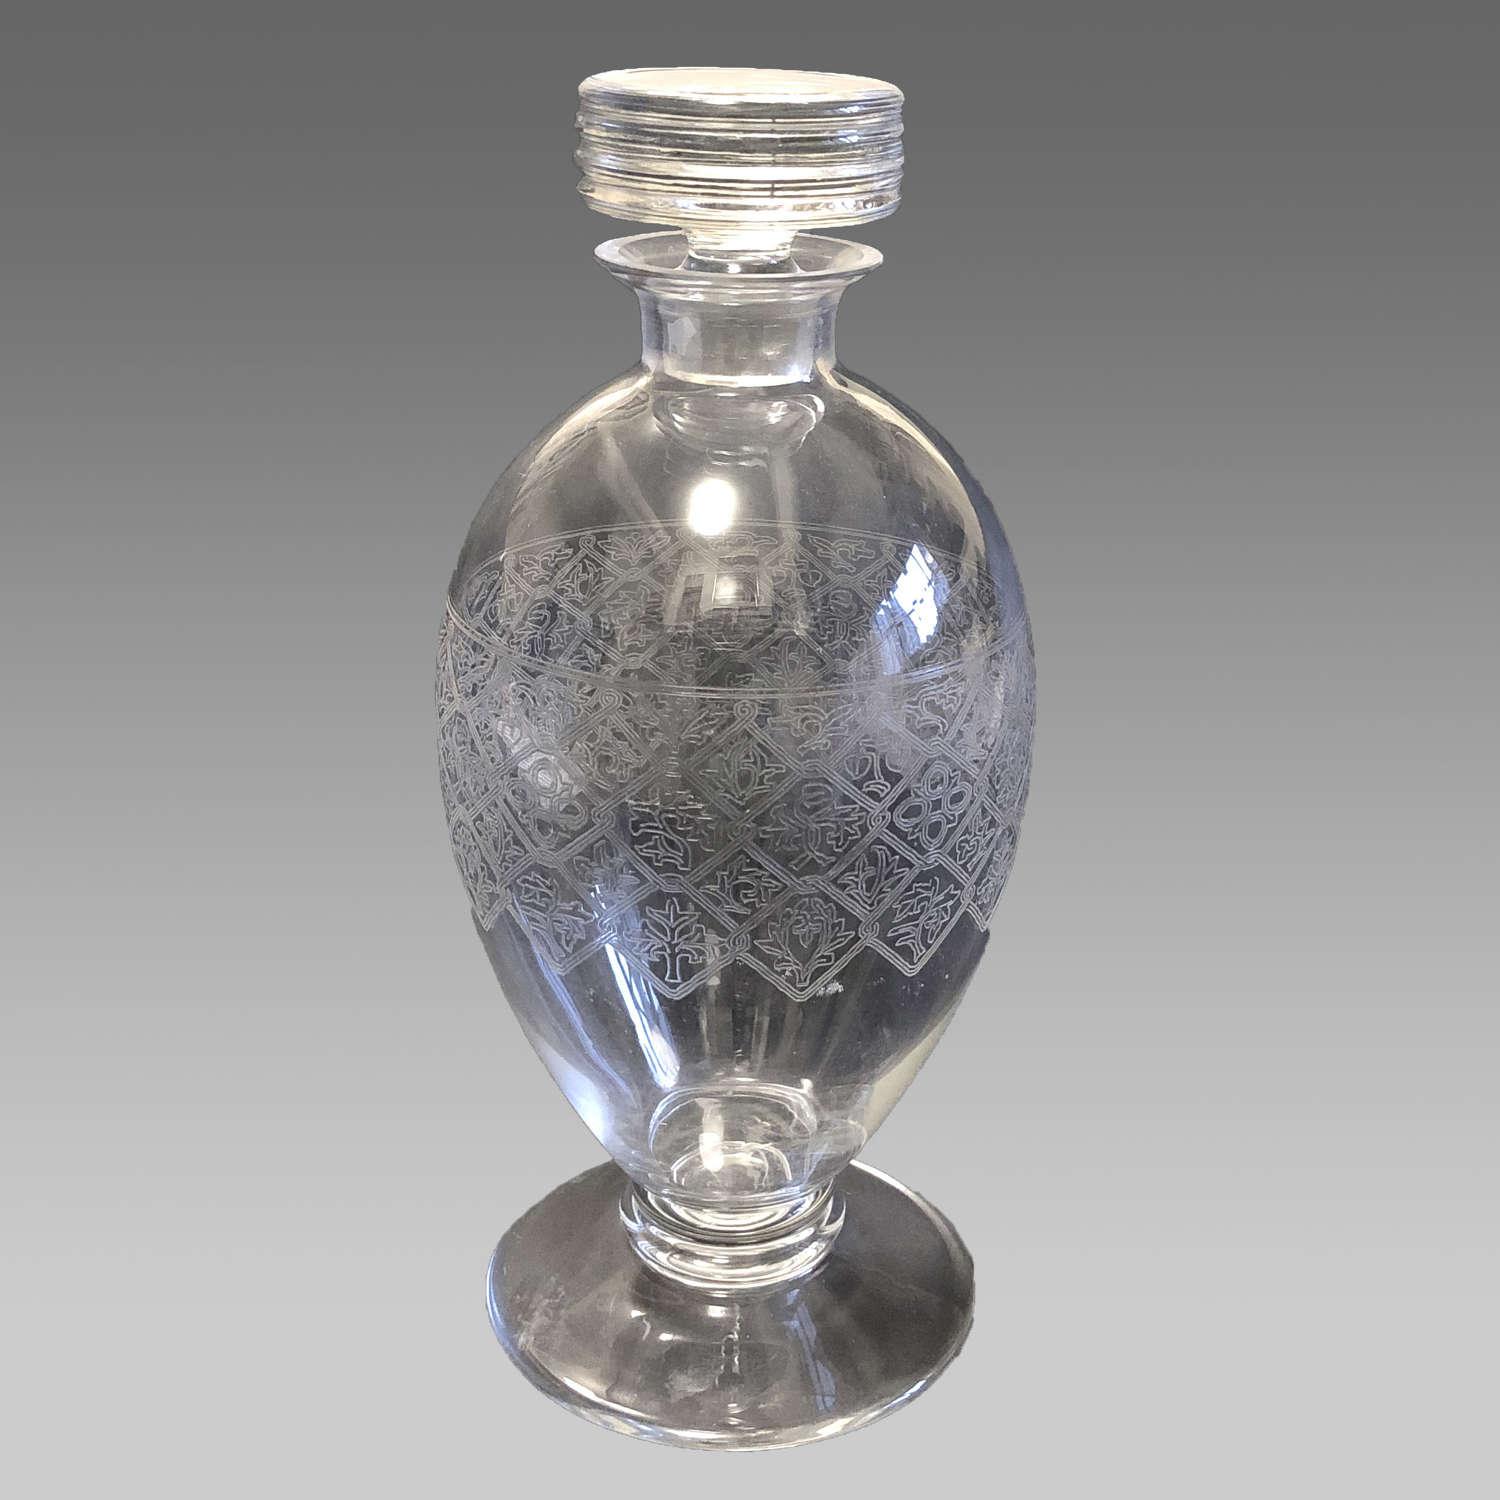 19th century glass decanter